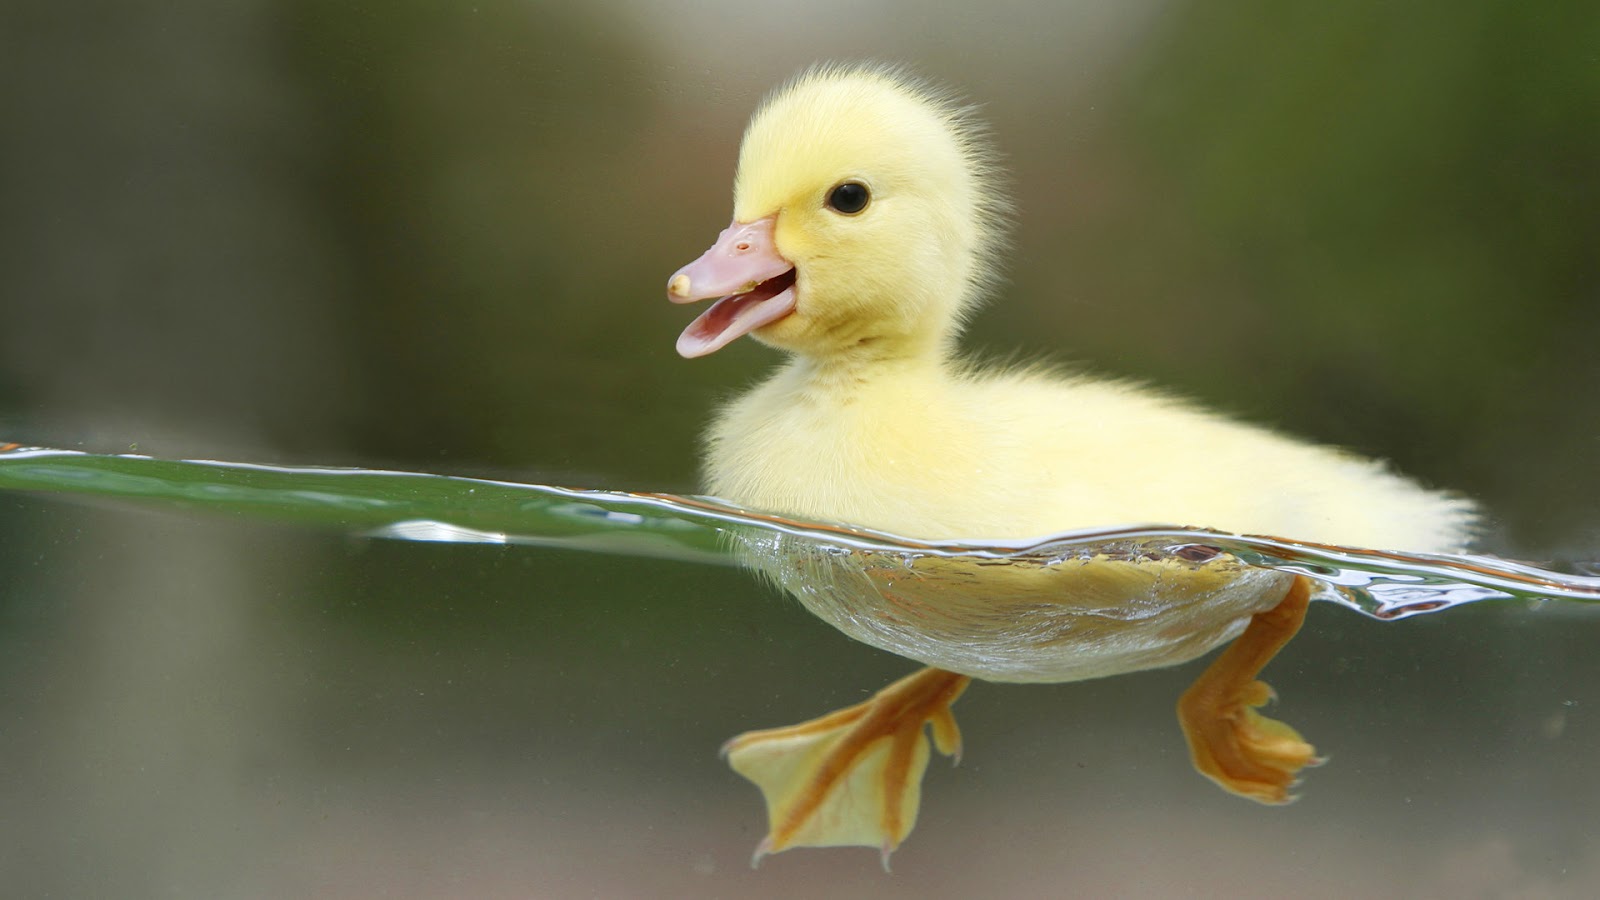 little-cute-duck-birds-hd-wallpapers-best-widescreen-duck-pictures.jpg